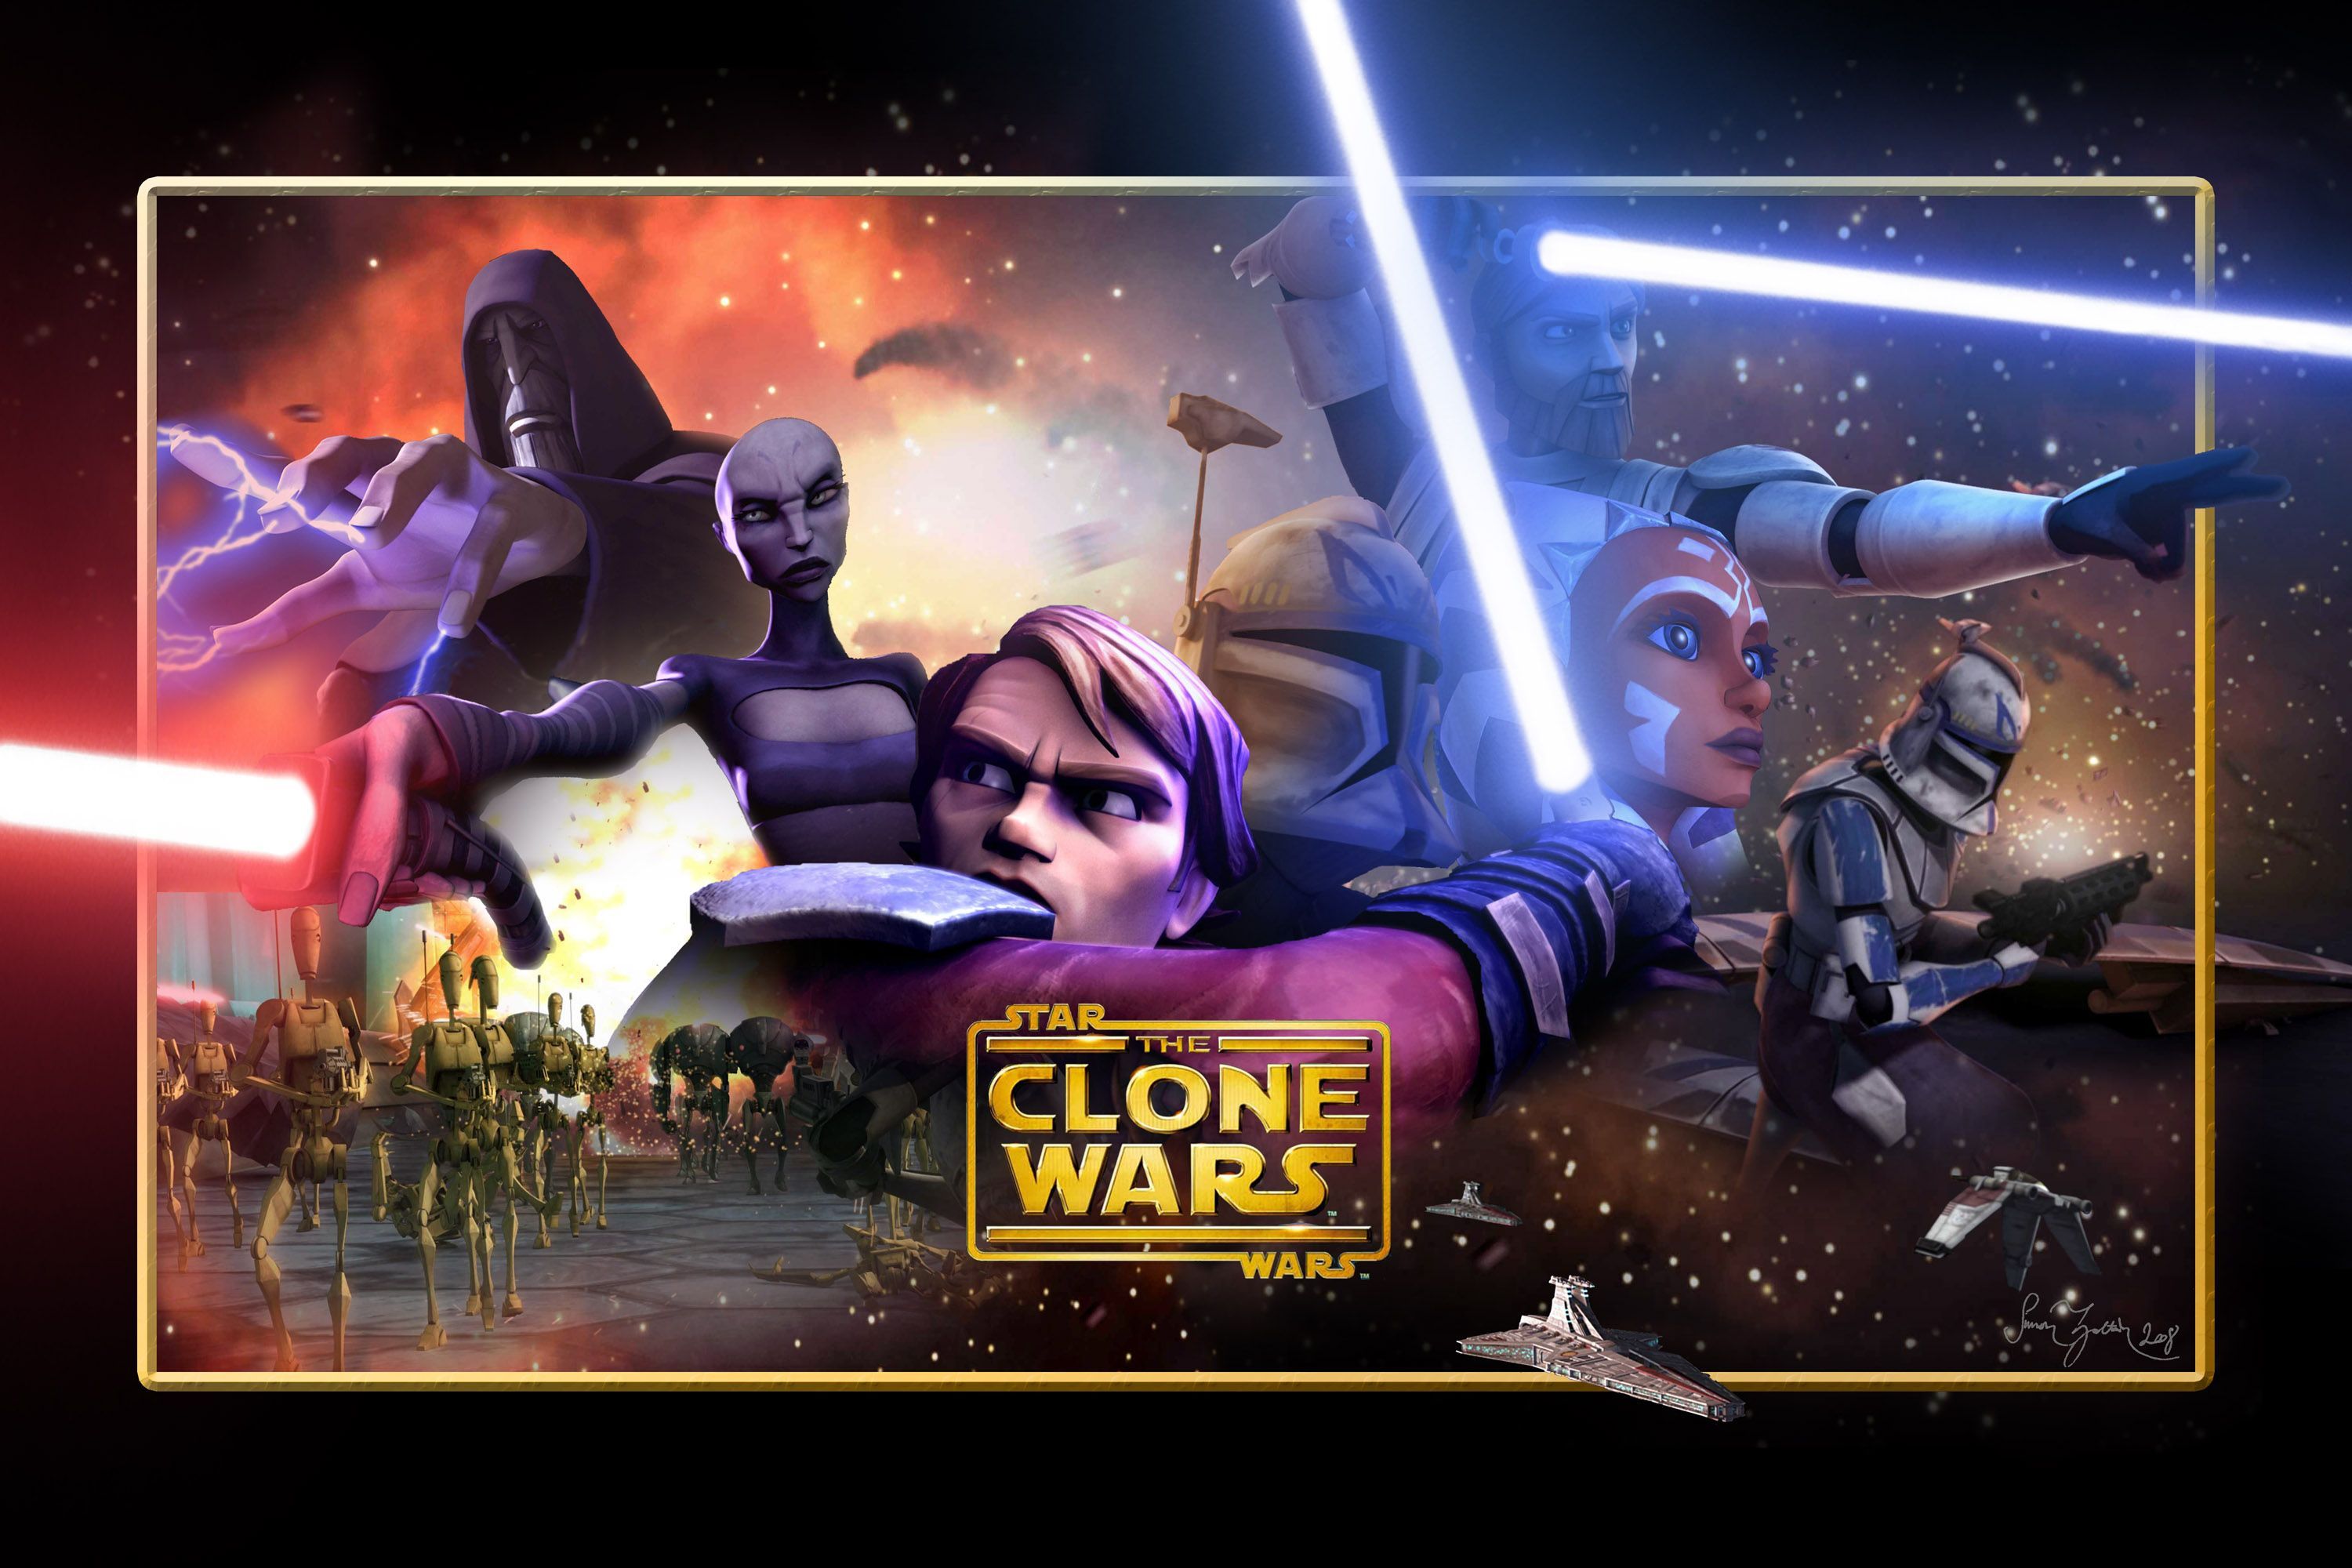 CG Animated Clone Wars (3000×2000). Star Wars Wallpaper, Star Wars Picture, Star Wars Clone Wars